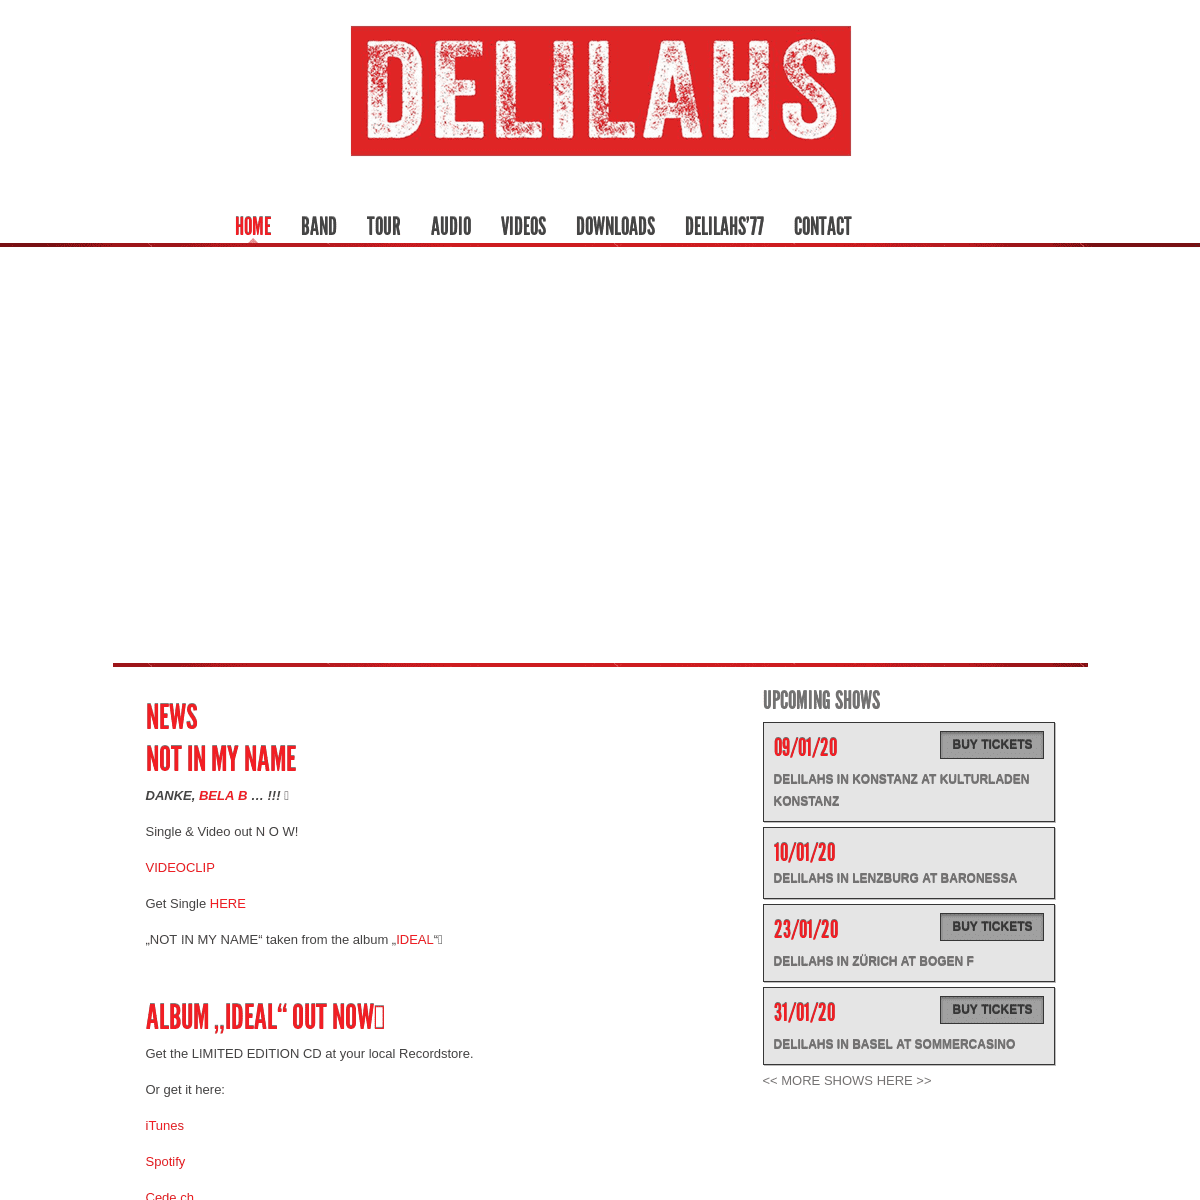 A complete backup of delilahsmusic.com